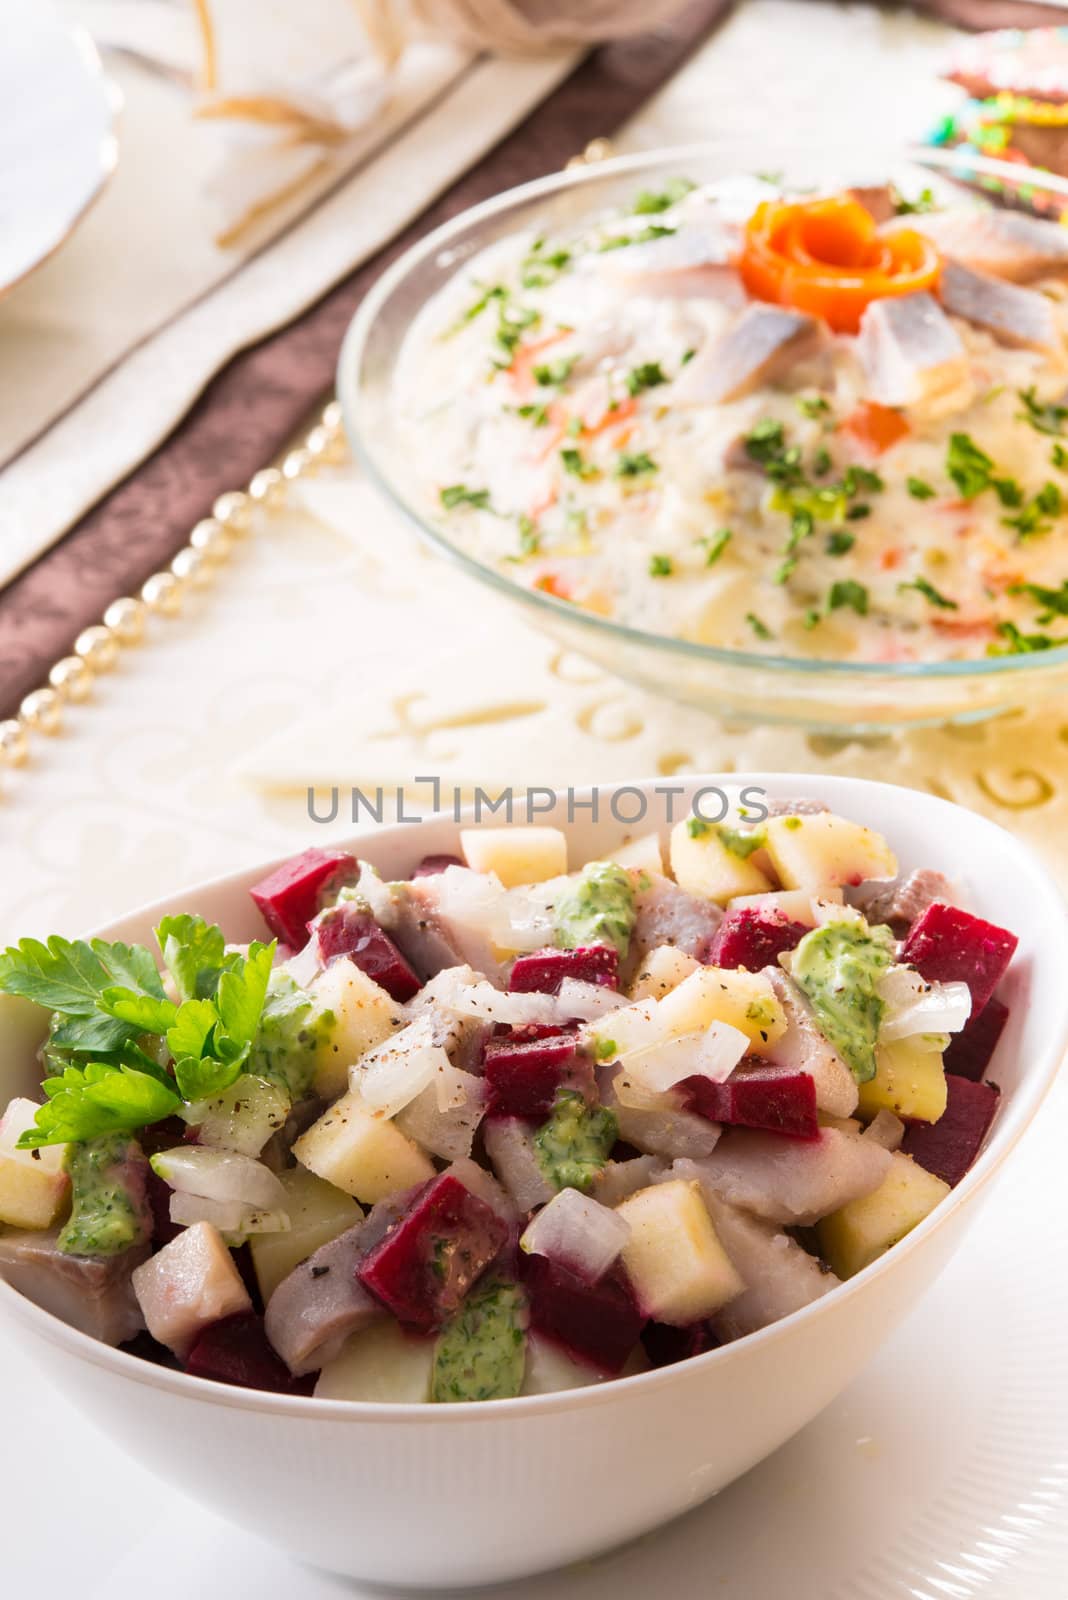 Herring salad with beetroot